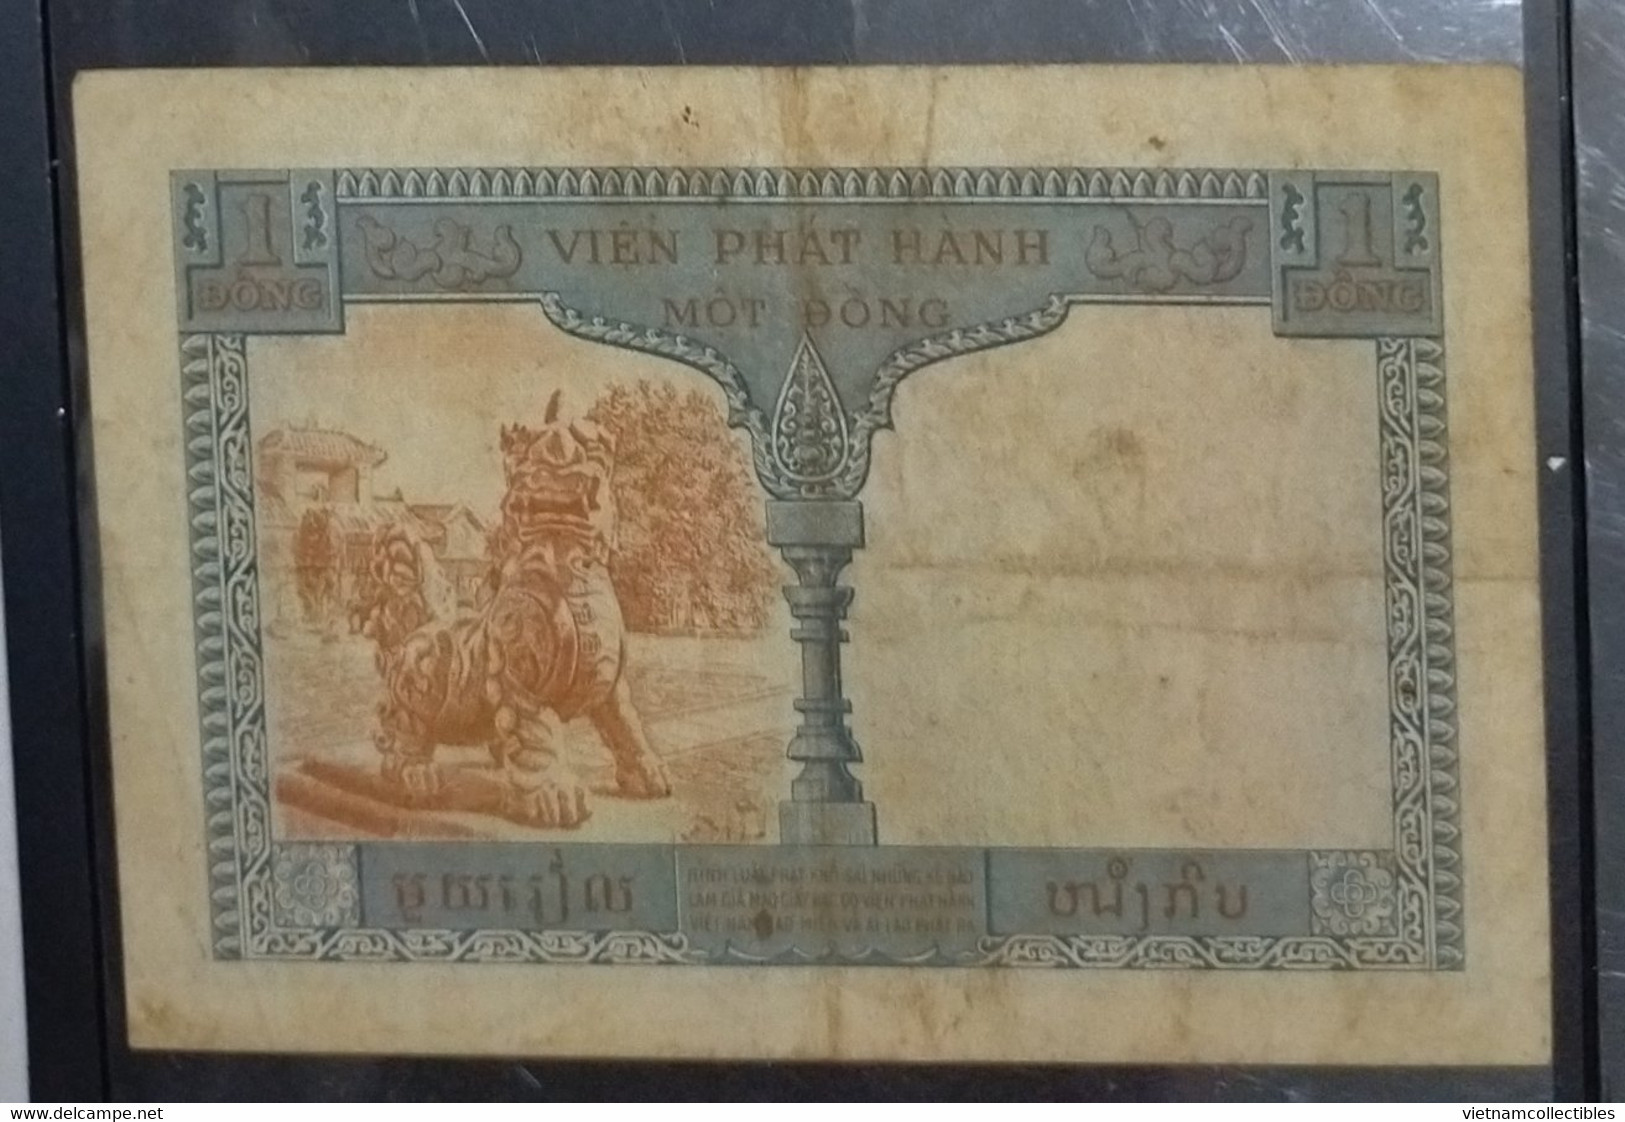 Indochina Indochine Vietnam Viet Nam Laos Cambodia 1 Piastre VF Banknote Note / Billet 1954 - Pick# 105 / 02 Photo - Indochina